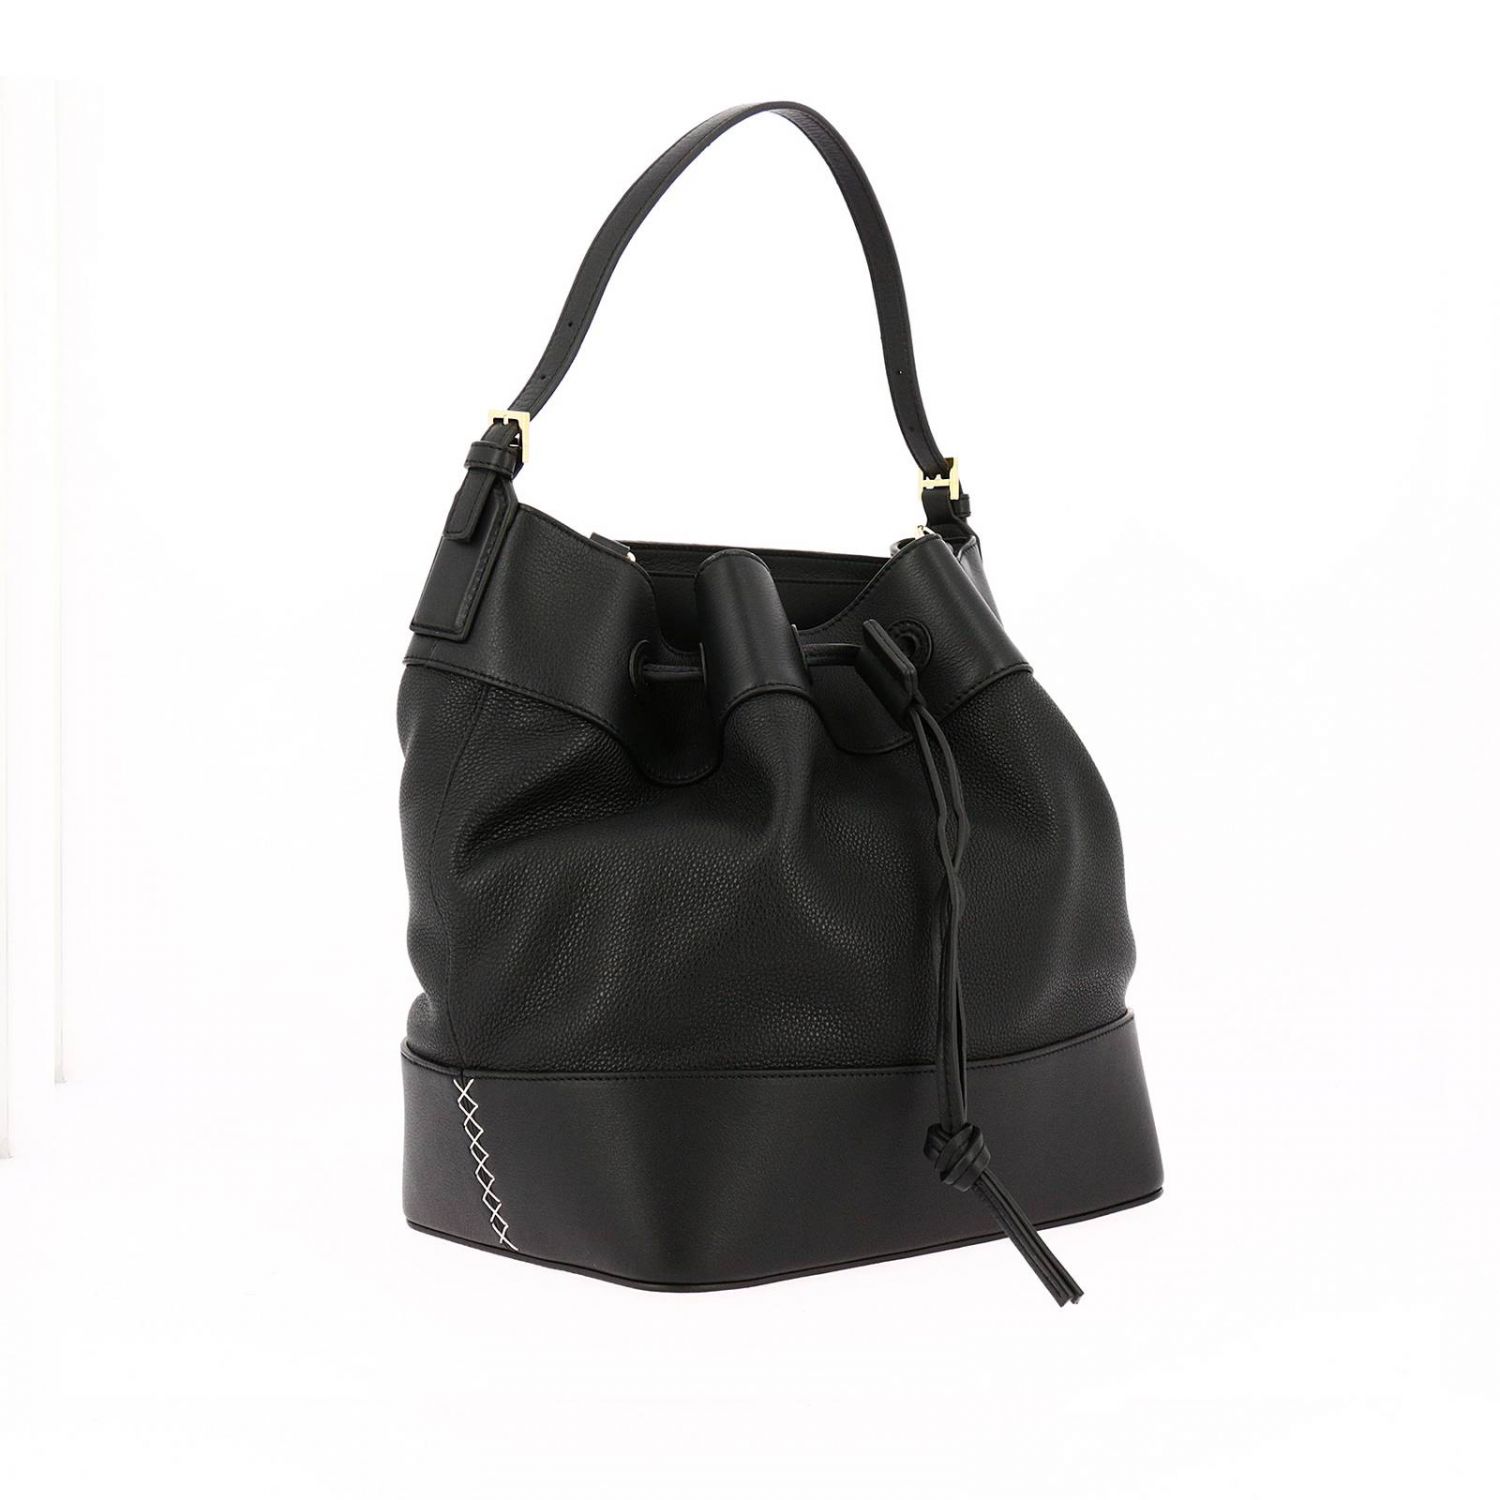 Shoulder bag women Loewe | Shoulder Bag Loewe Women Black | Shoulder ...